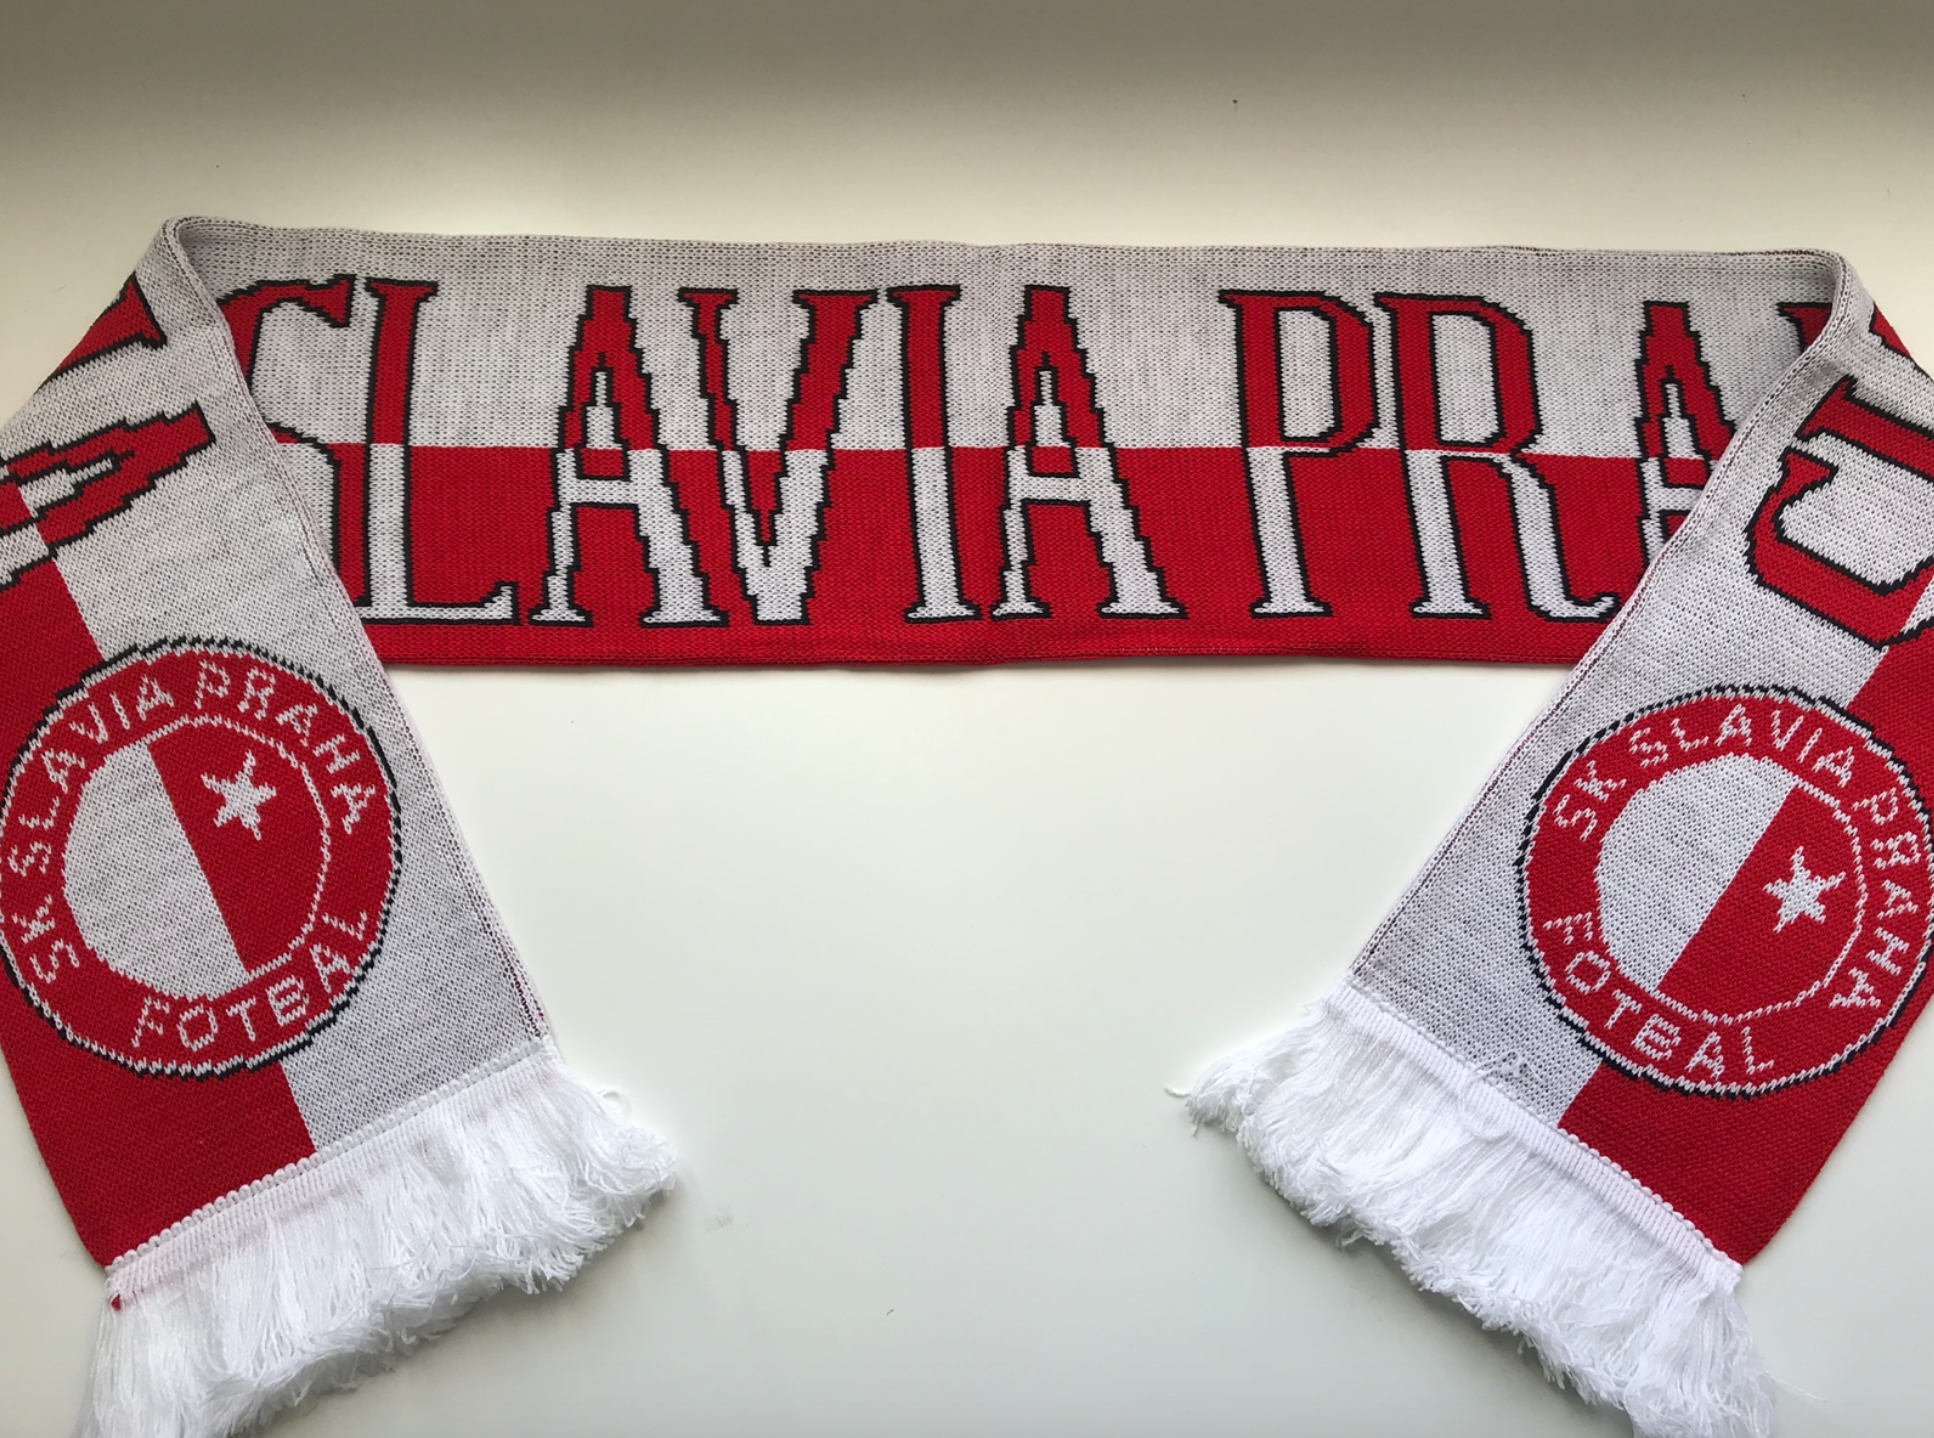 Scarf Sk Slavia Praha Czech Republic Club Calcio Football Gift 